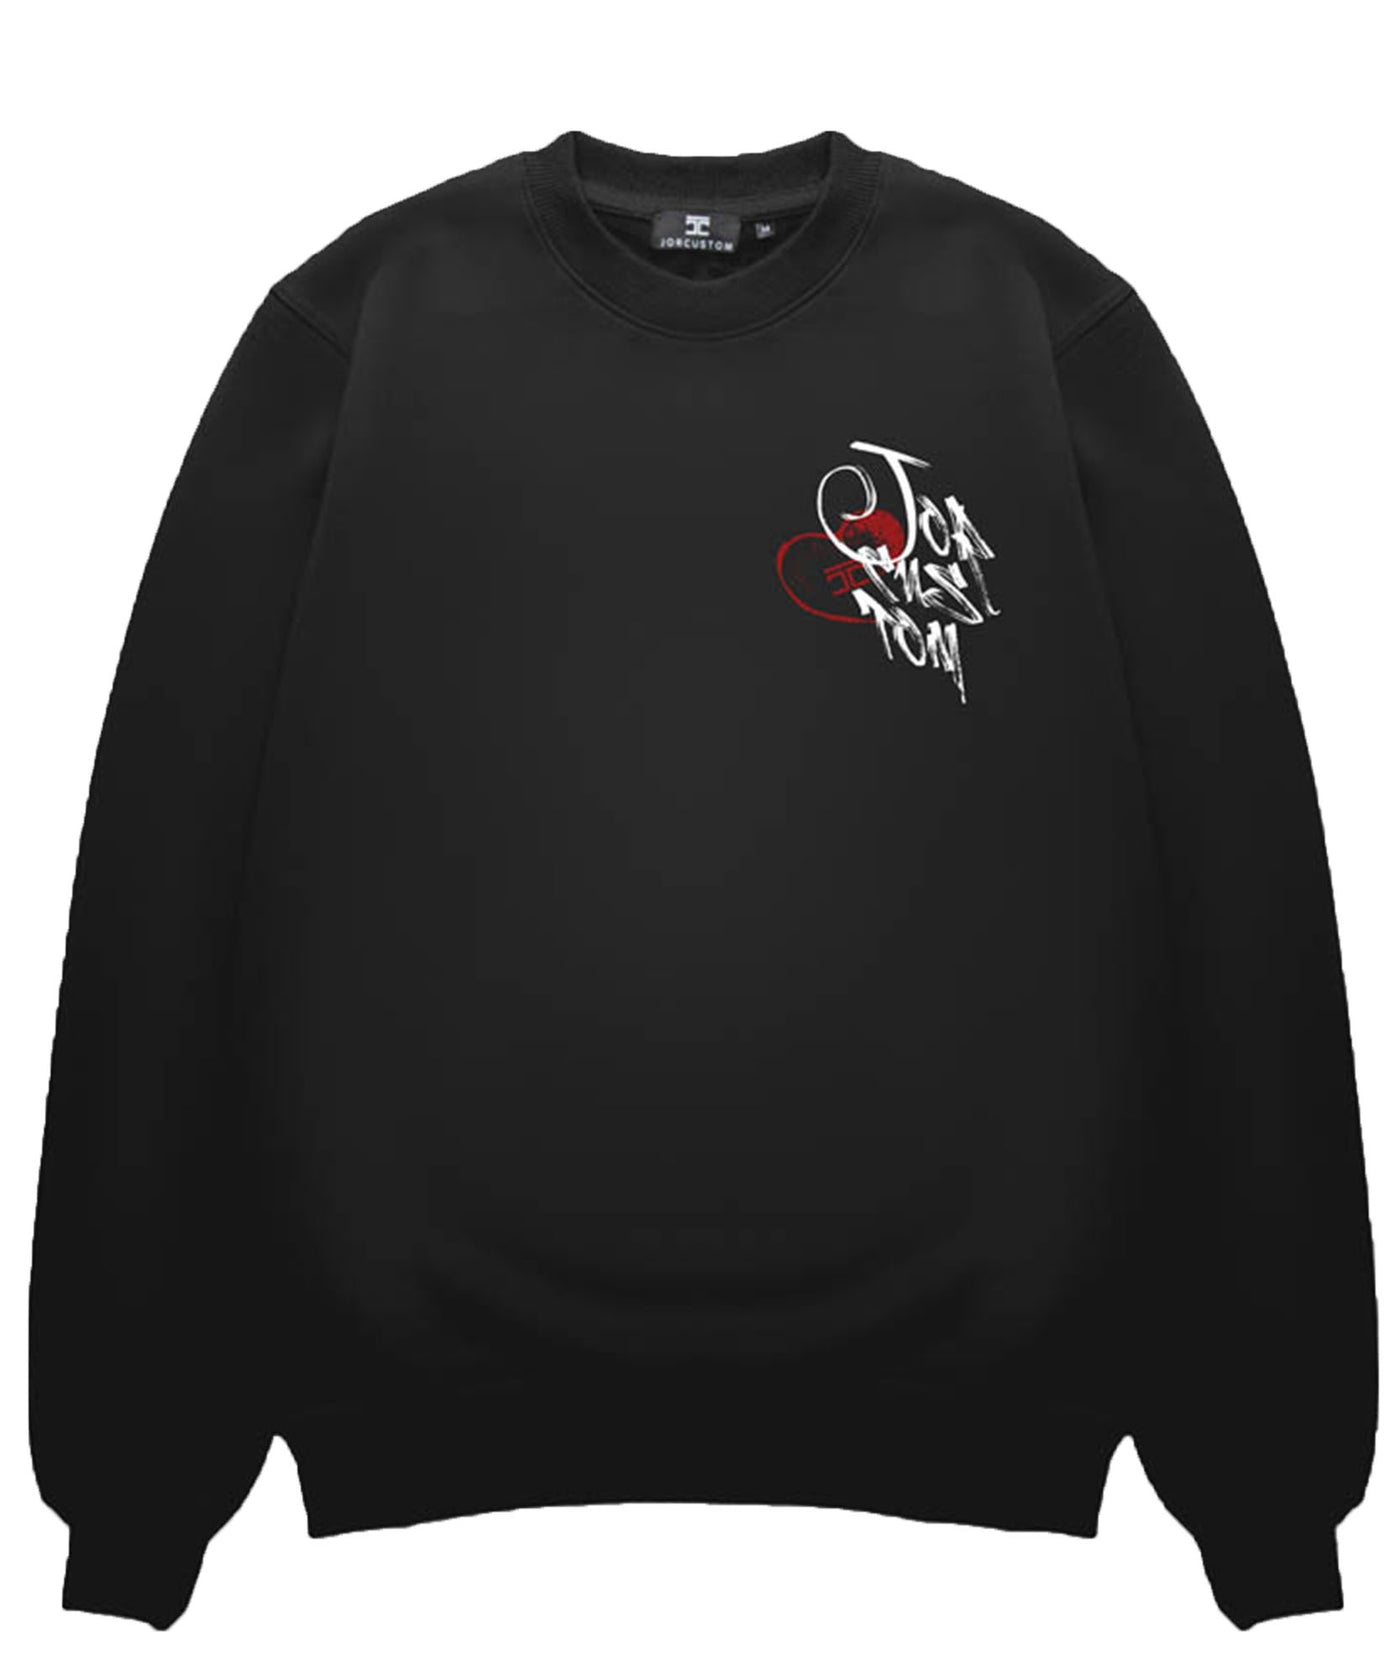 JorCustom - Loveangel - Sweater - Black